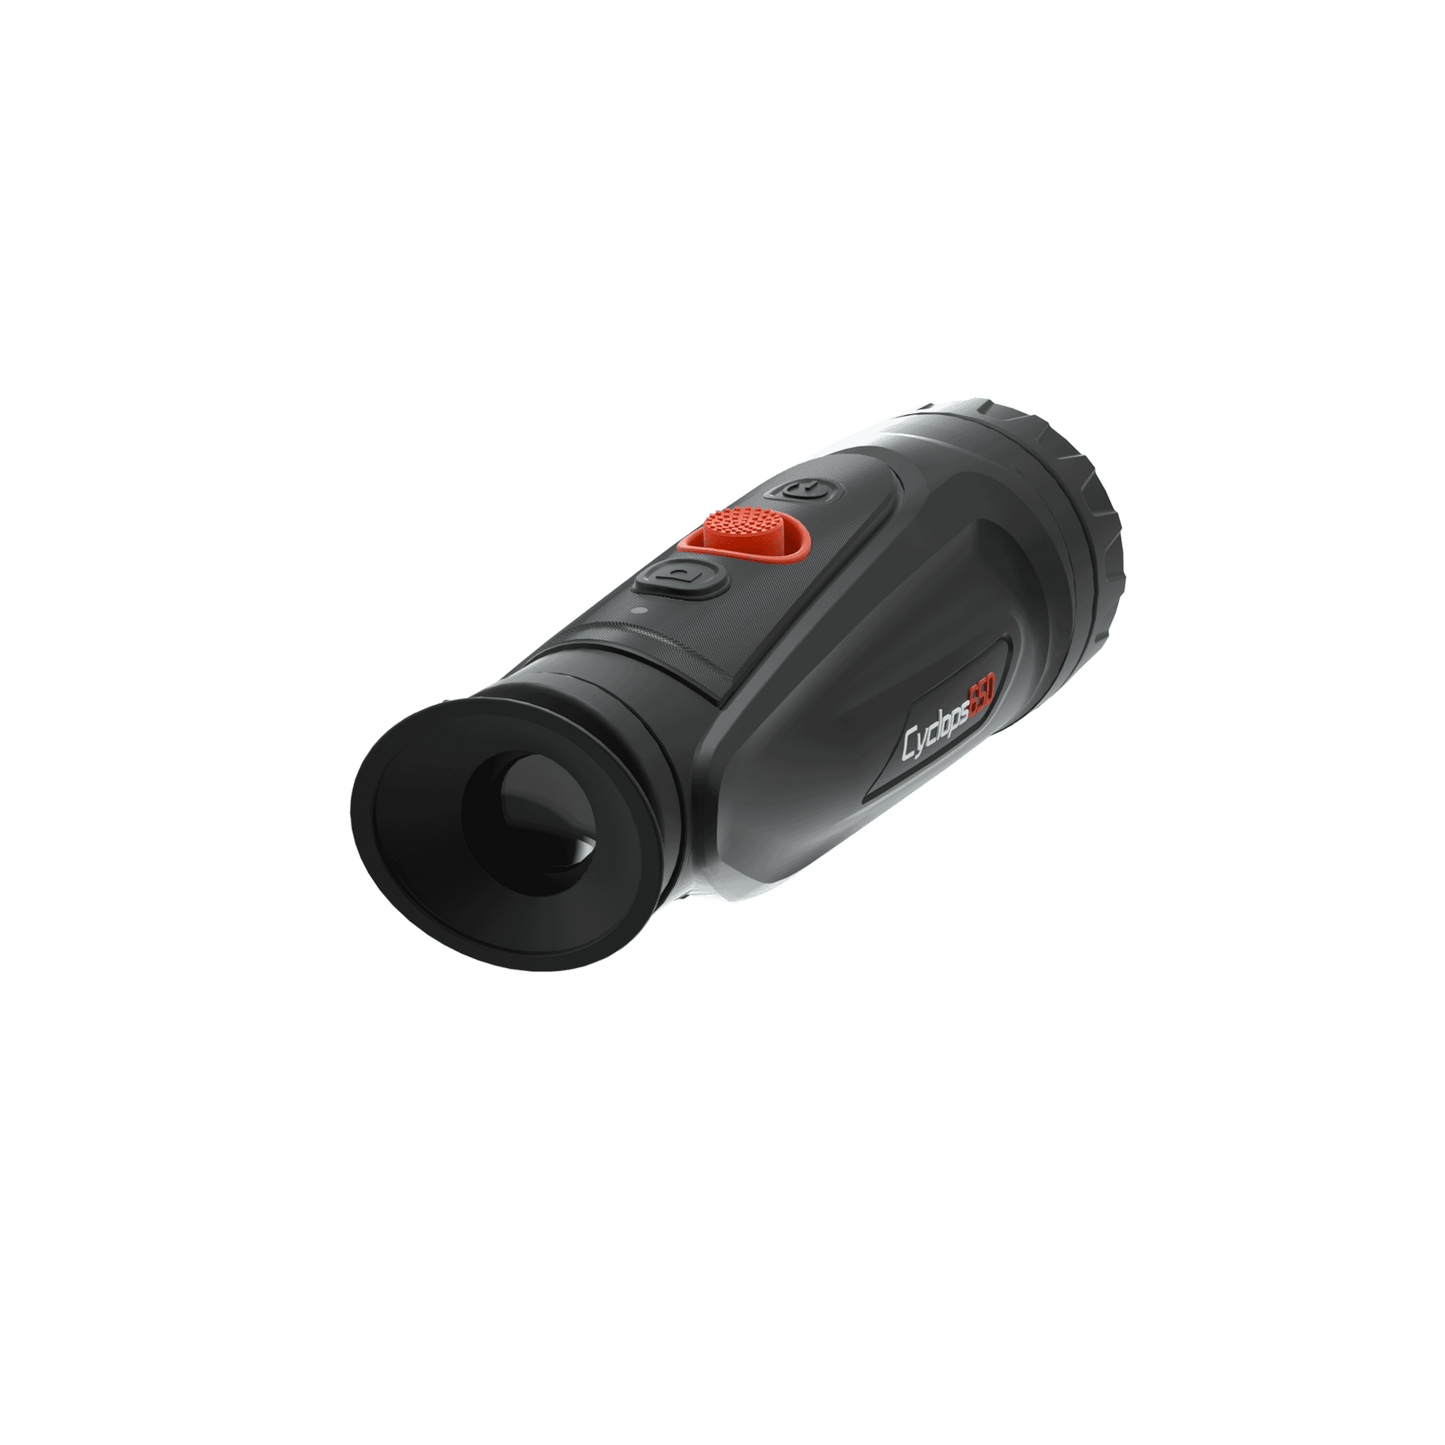 Cyclops 650 termisk spotter med optager